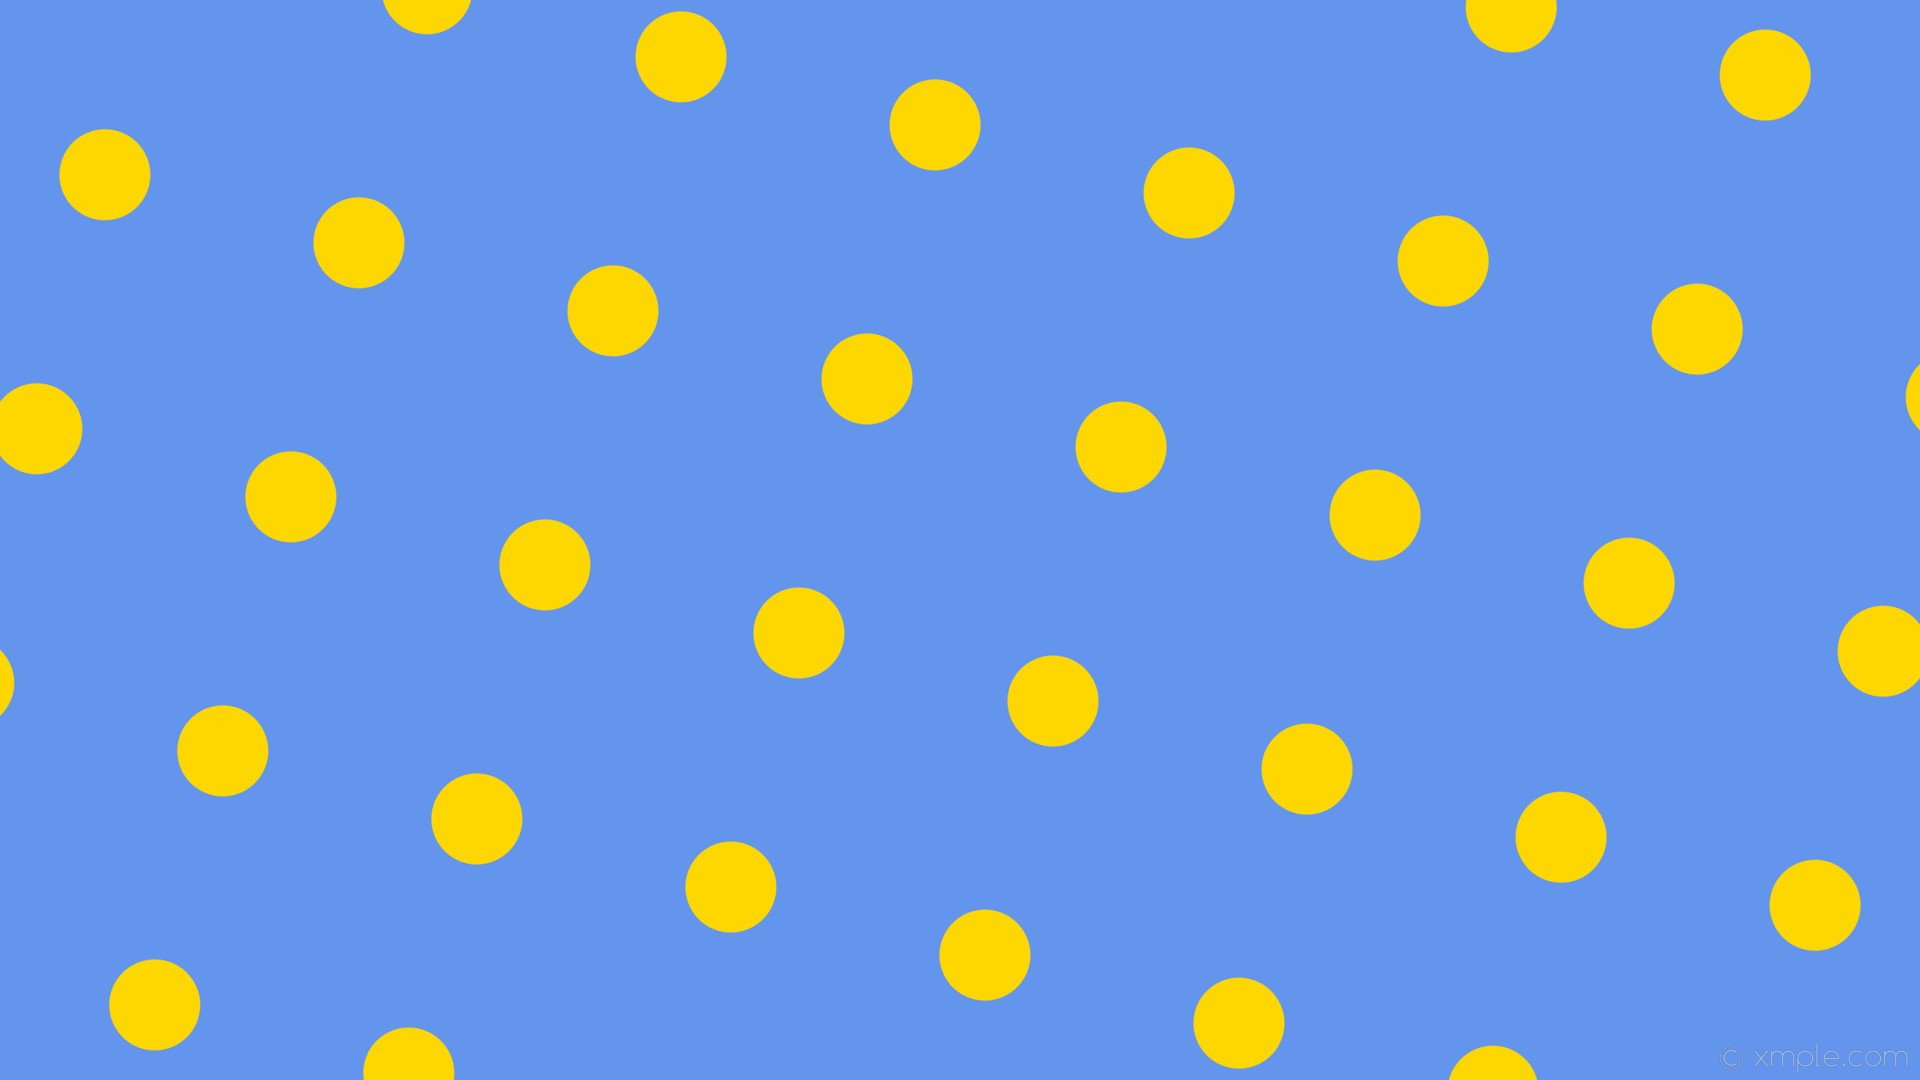 1920x1080 wallpaper blue dots yellow polka spots cornflower blue gold #6495ed #ffd700  165Â° 91px